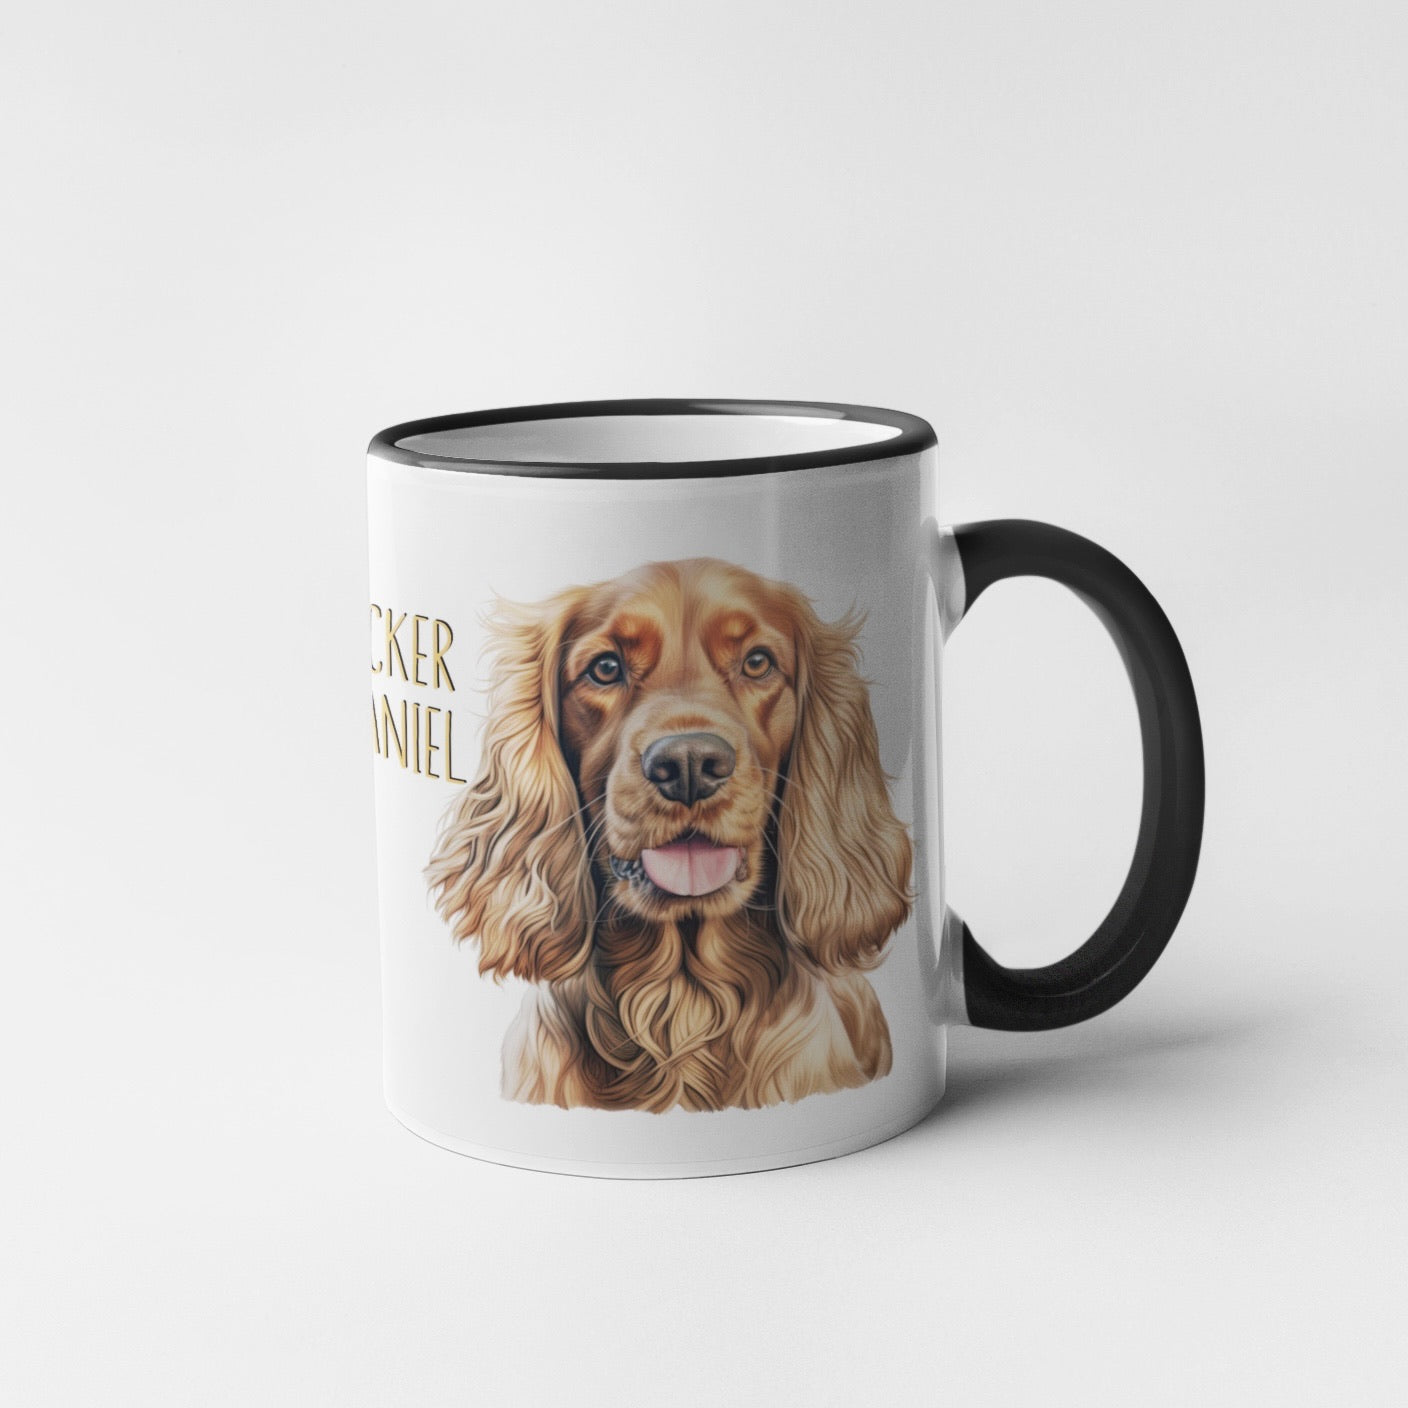 Cocker Spaniel Dogs Collection Art Personalised Ceramic Mug Gift Idea